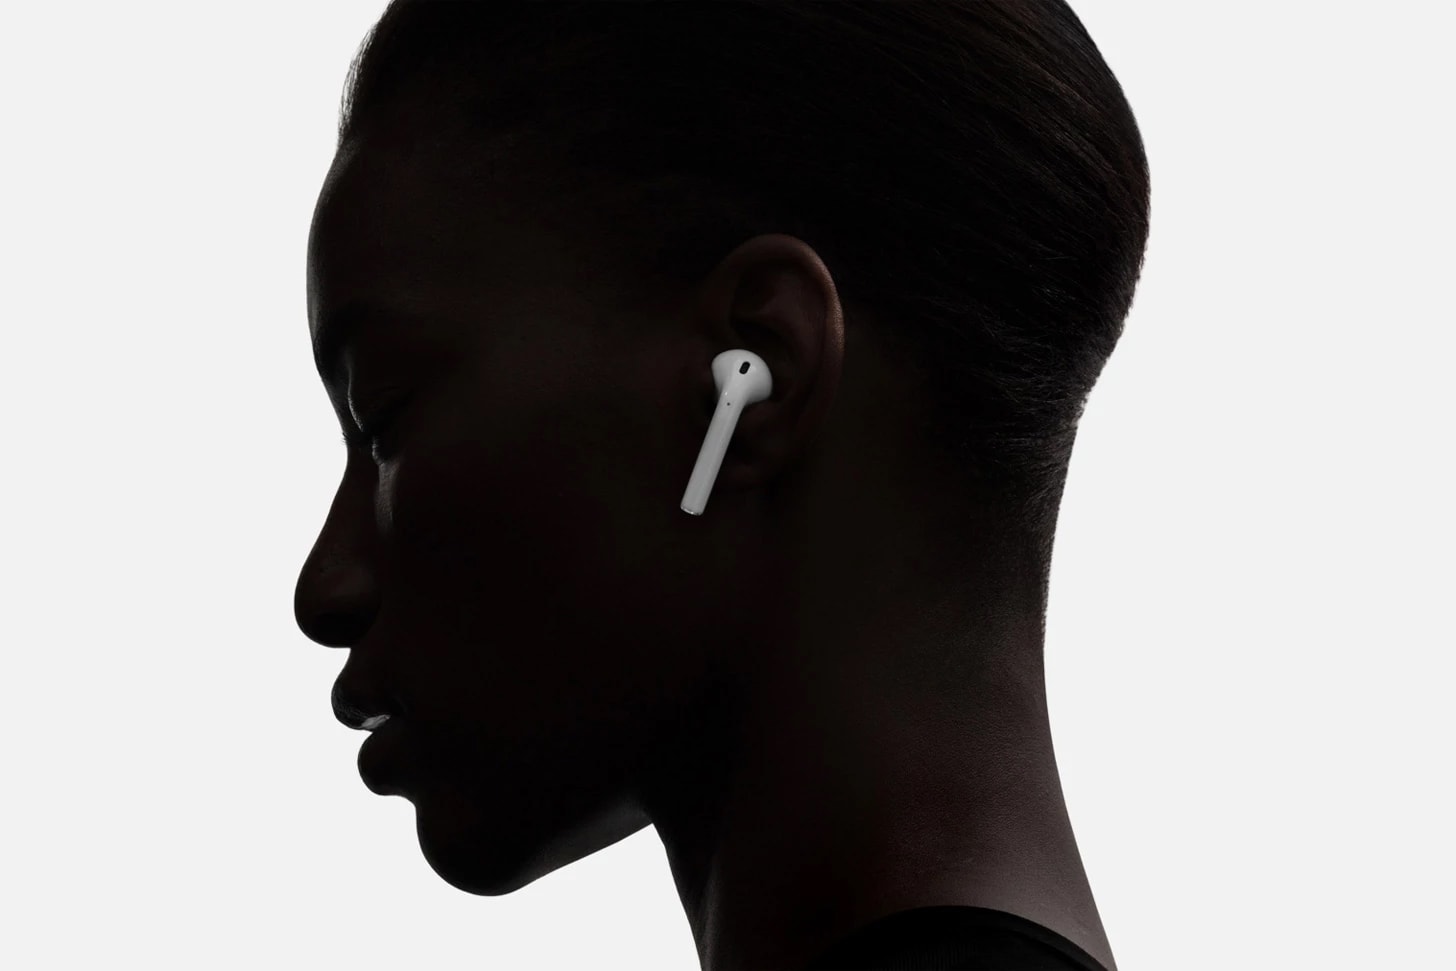 noise cancellation apple airpods earphones water resistant rumors